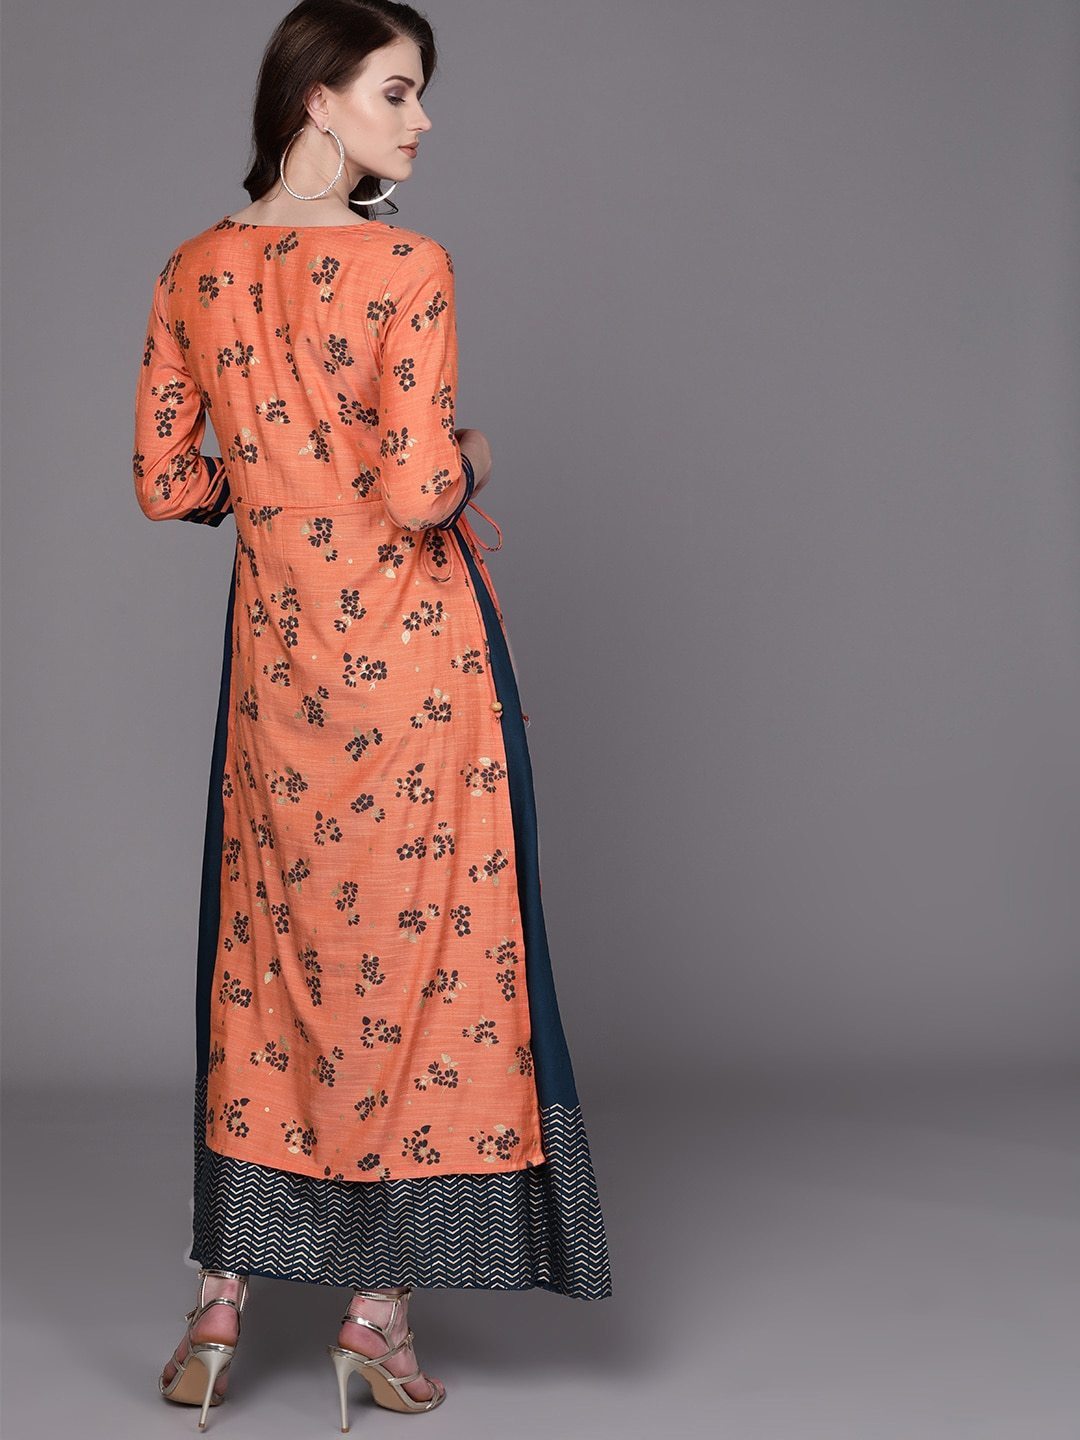 Women's  Orange & Teal Blue Floral Print Layered Maxi Dress - AKS